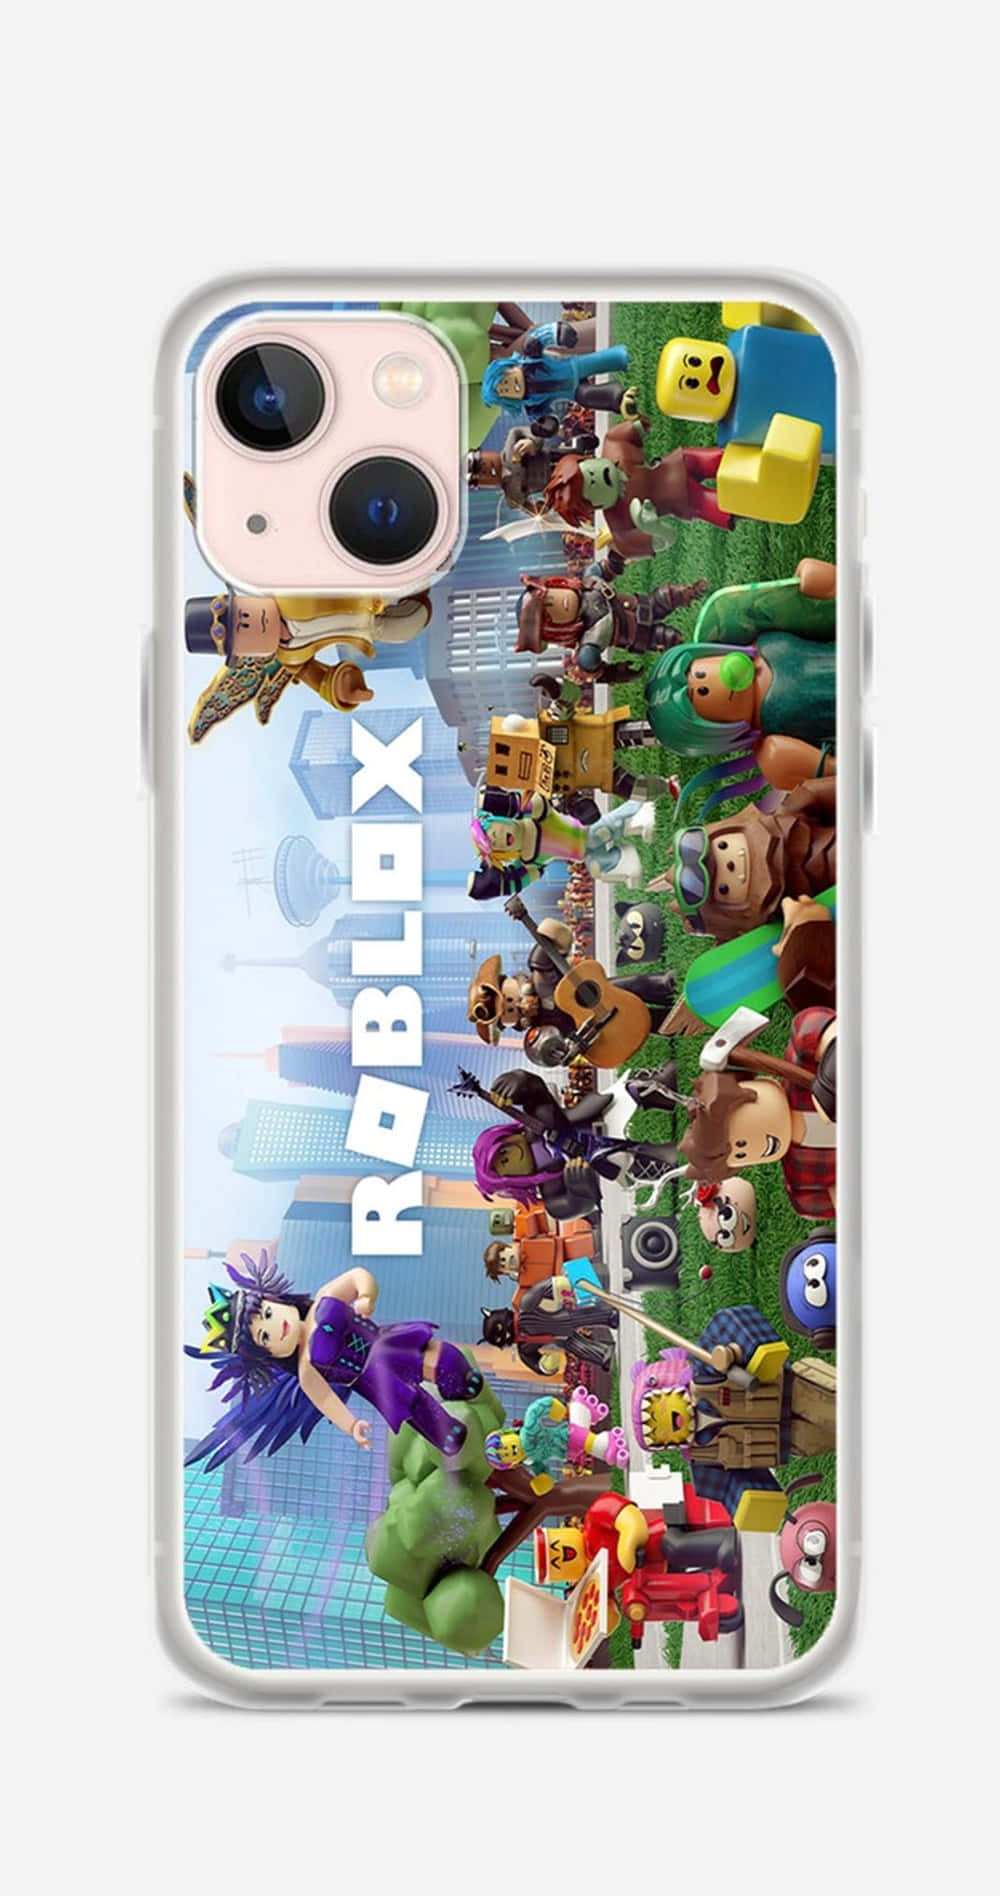 Wallpaper - Roblox ikoniske tegns Plakat iPhone Tapet Wallpaper